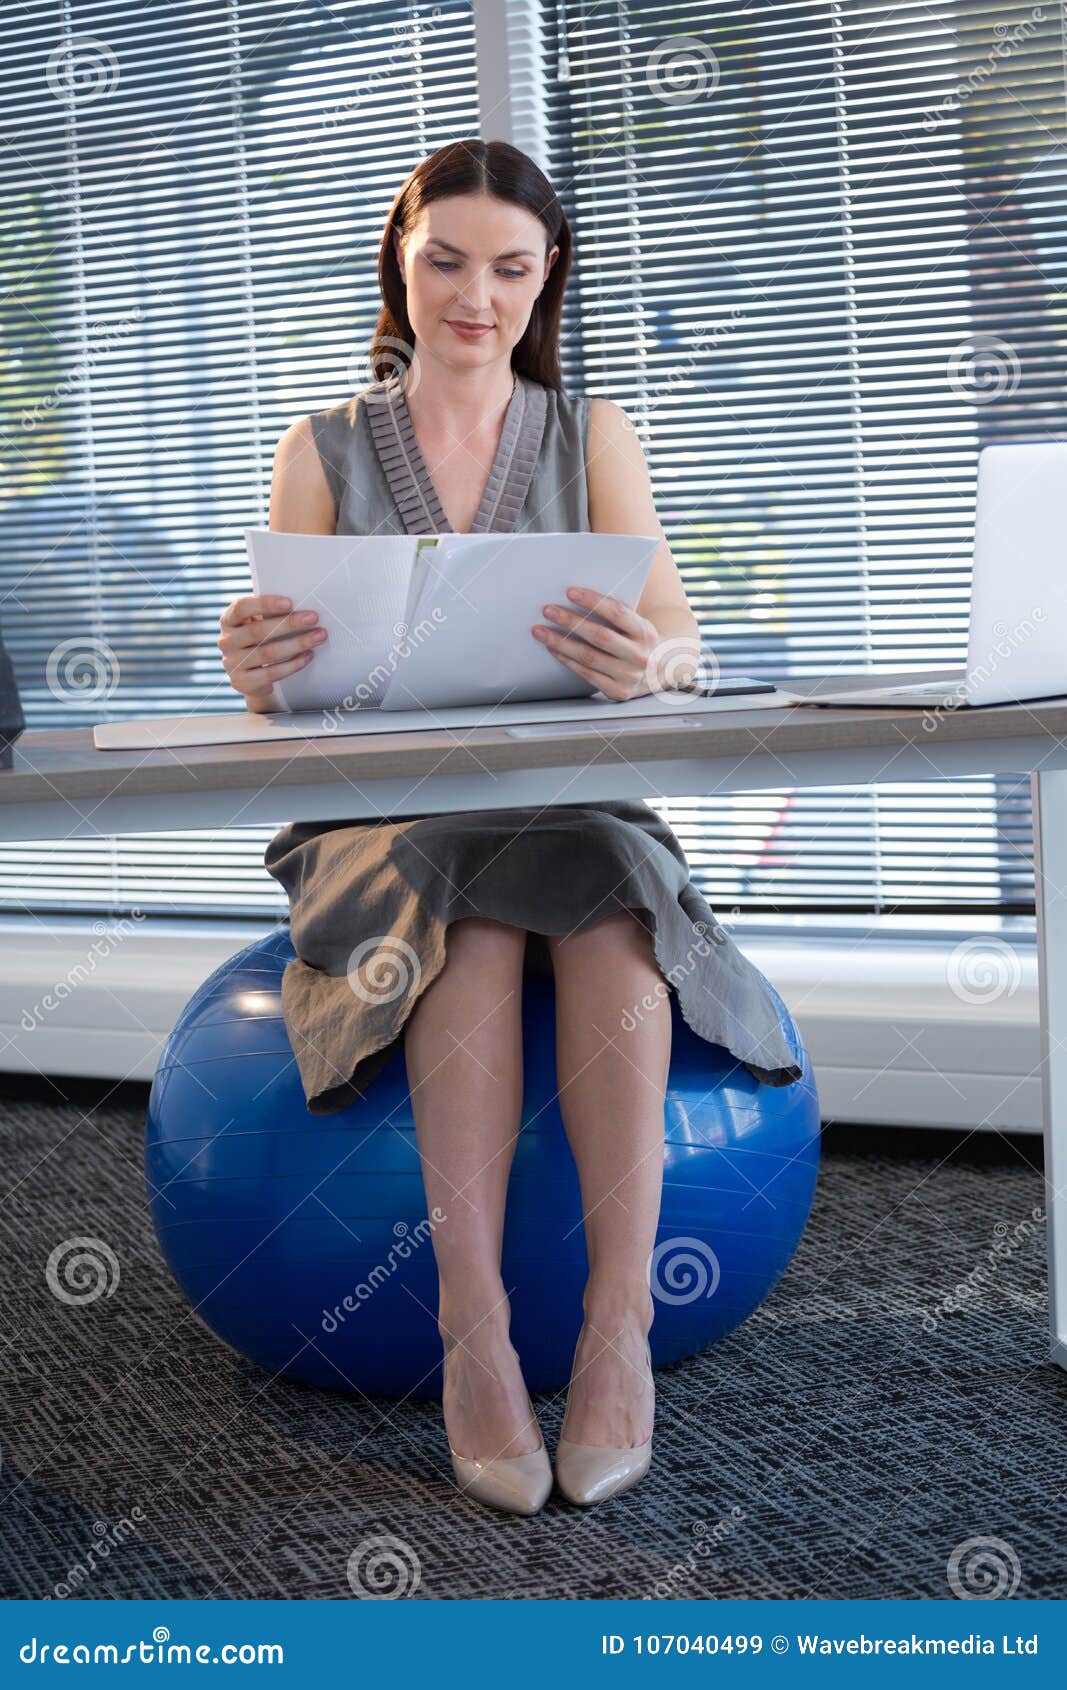 Female Executive Sitting On Exercise Ball While Reading Documents